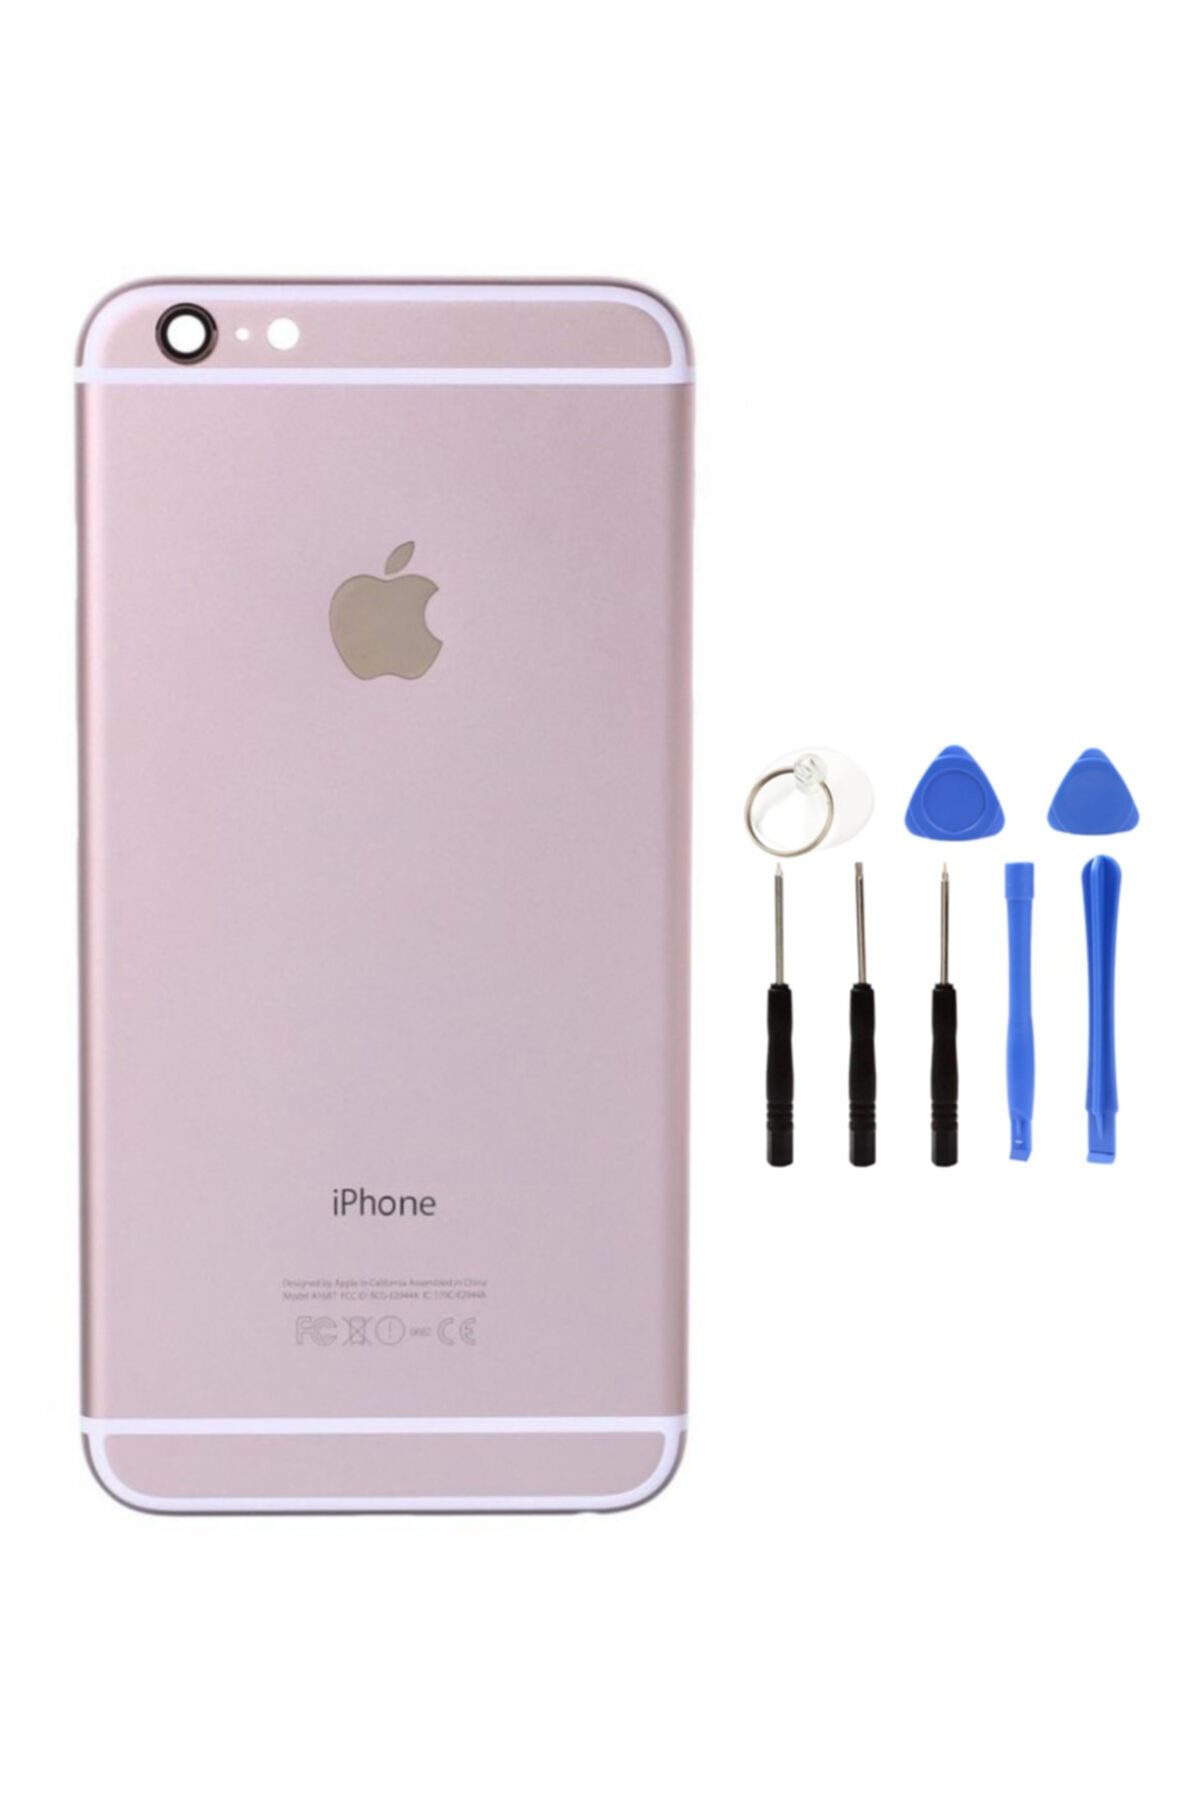 instatech Apple Iphone 6s Plus Dolu Kasa + Montaj Seti Hediye - Gold